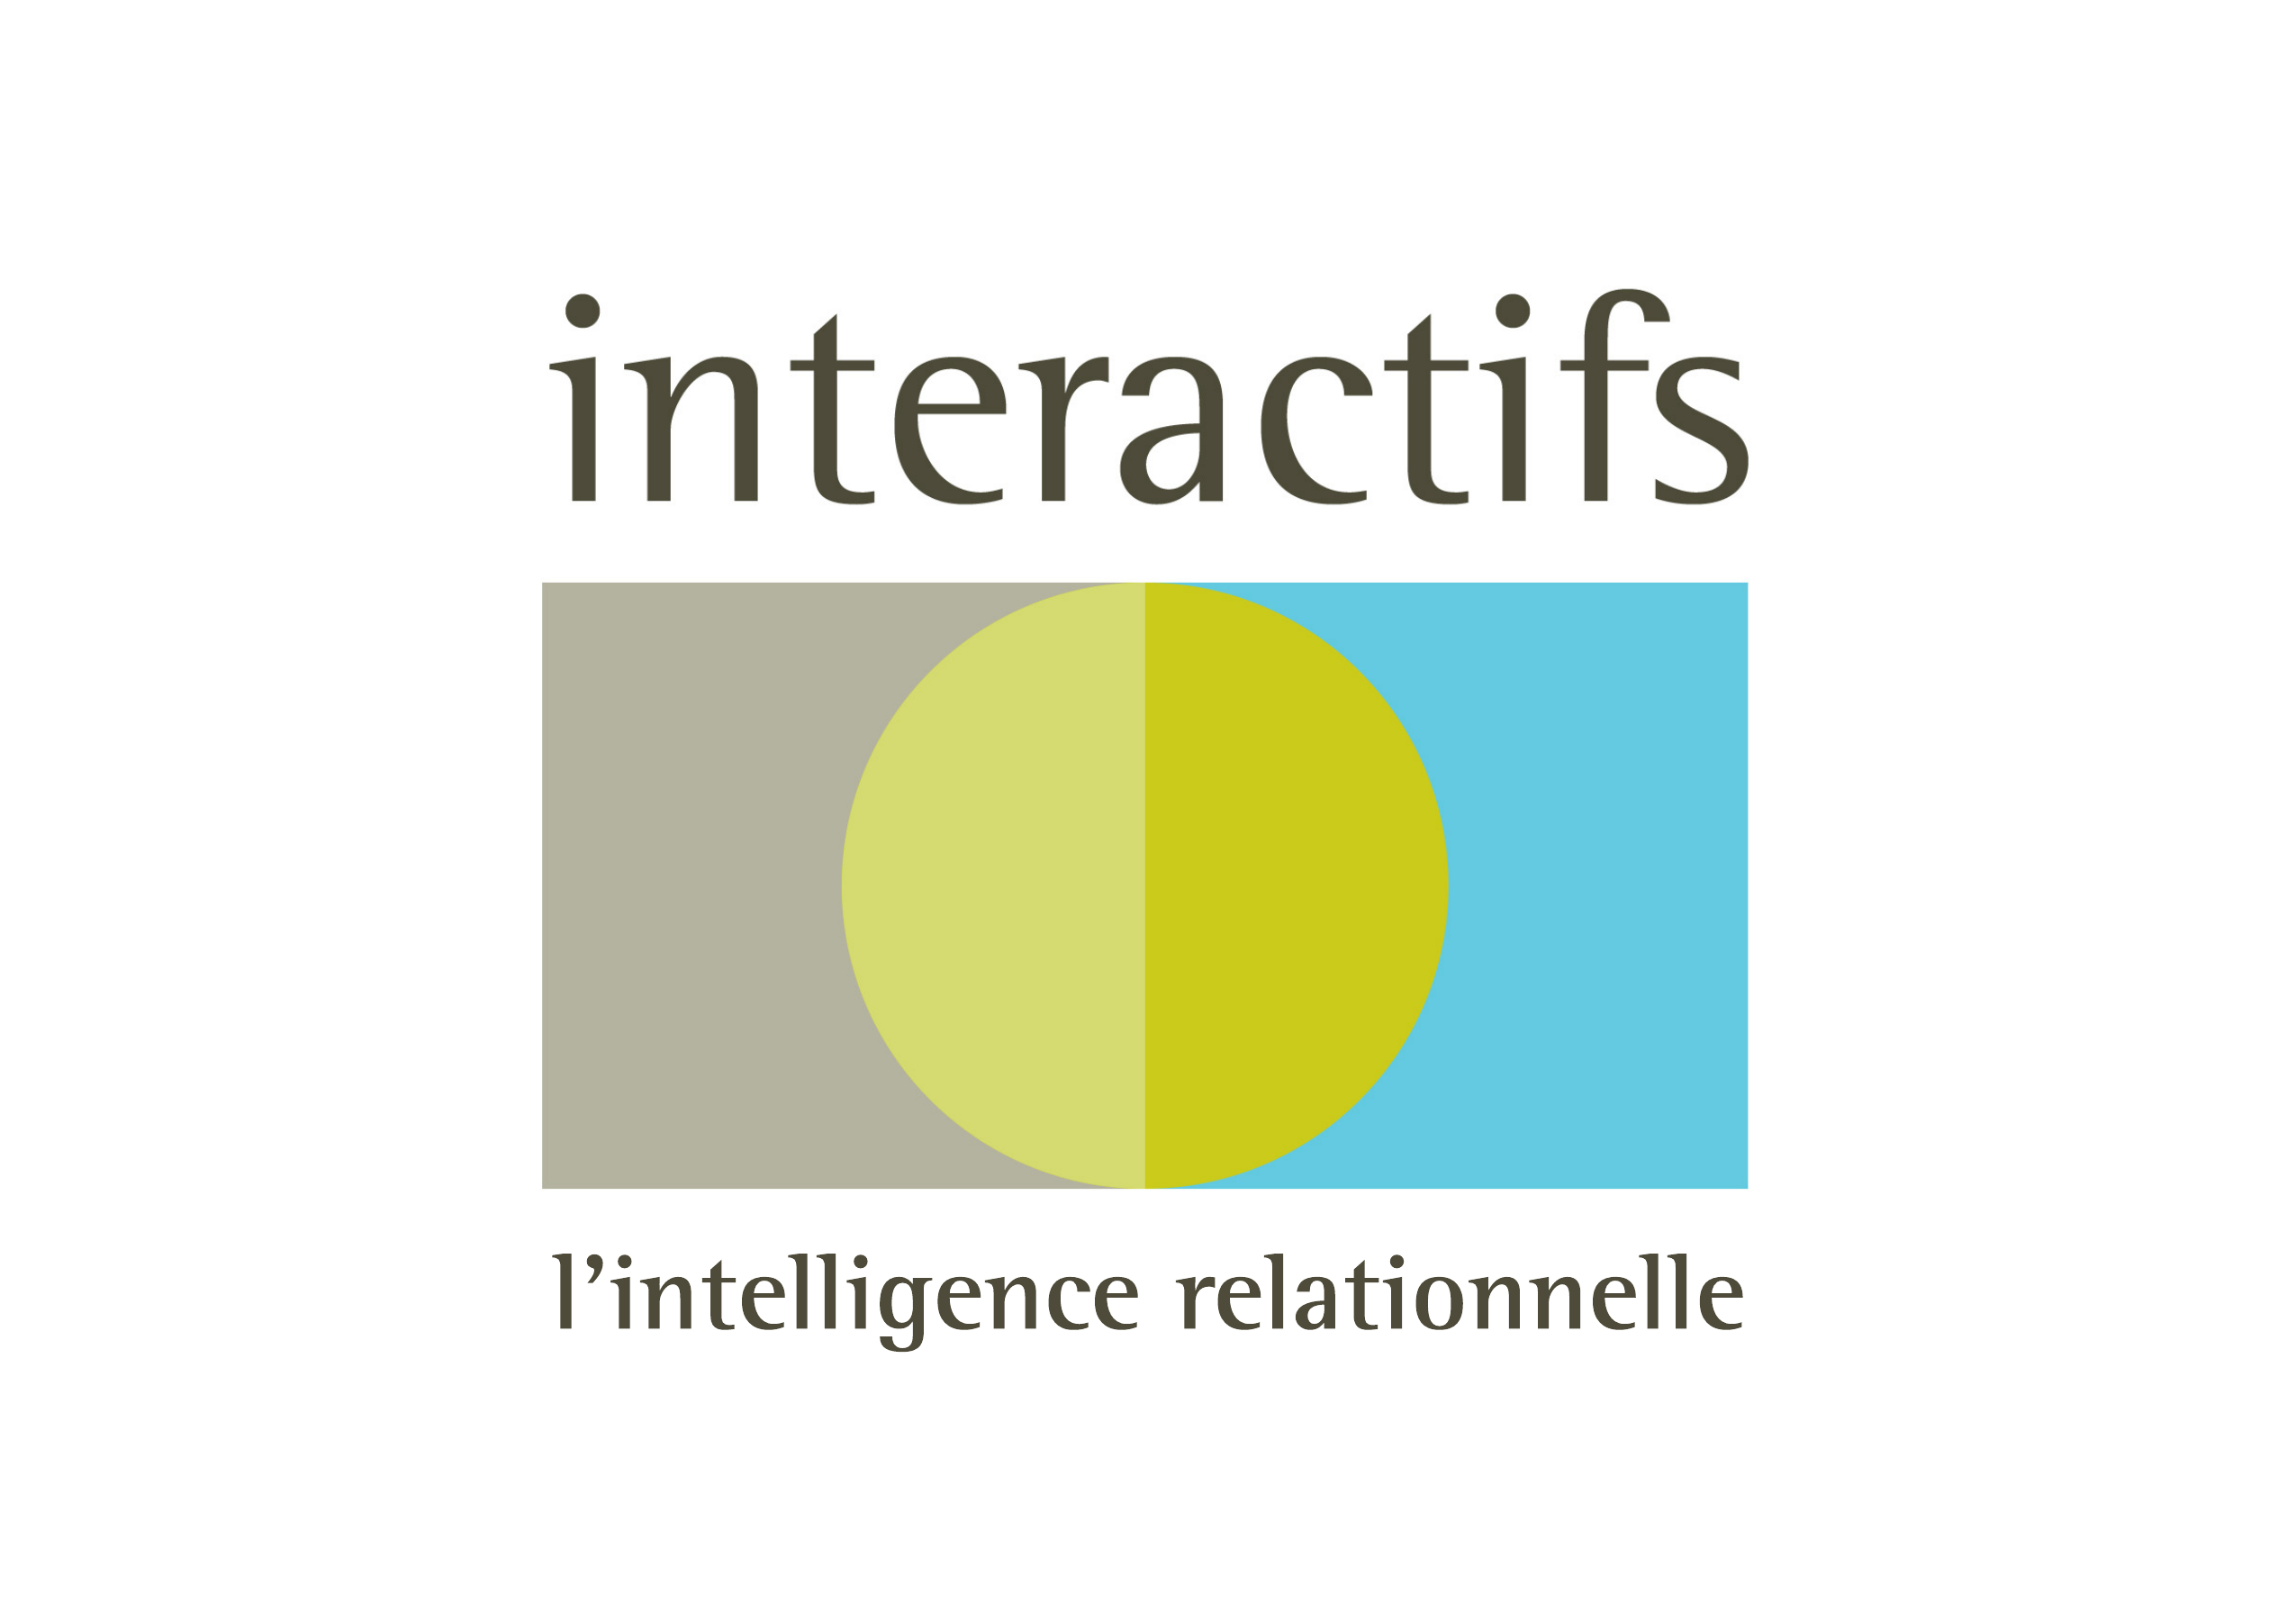 interactifs-company-logo-61aa4bc312fd2721318527.png